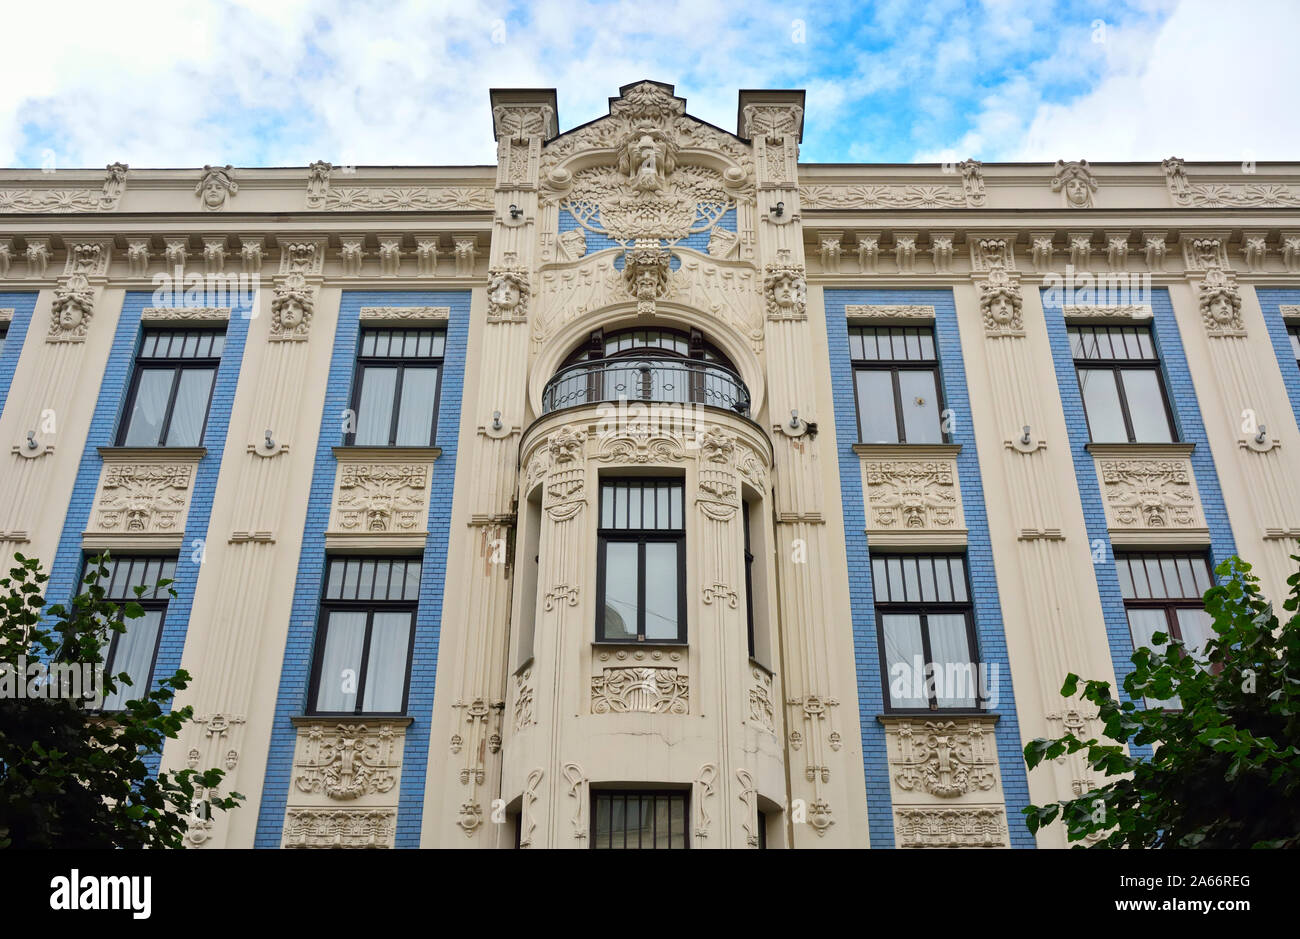 Arquitectura Art Nouveau (Jugendstil arquitectura). Un sitio de Patrimonio Mundial de la Unesco. Riga, Letonia Foto de stock